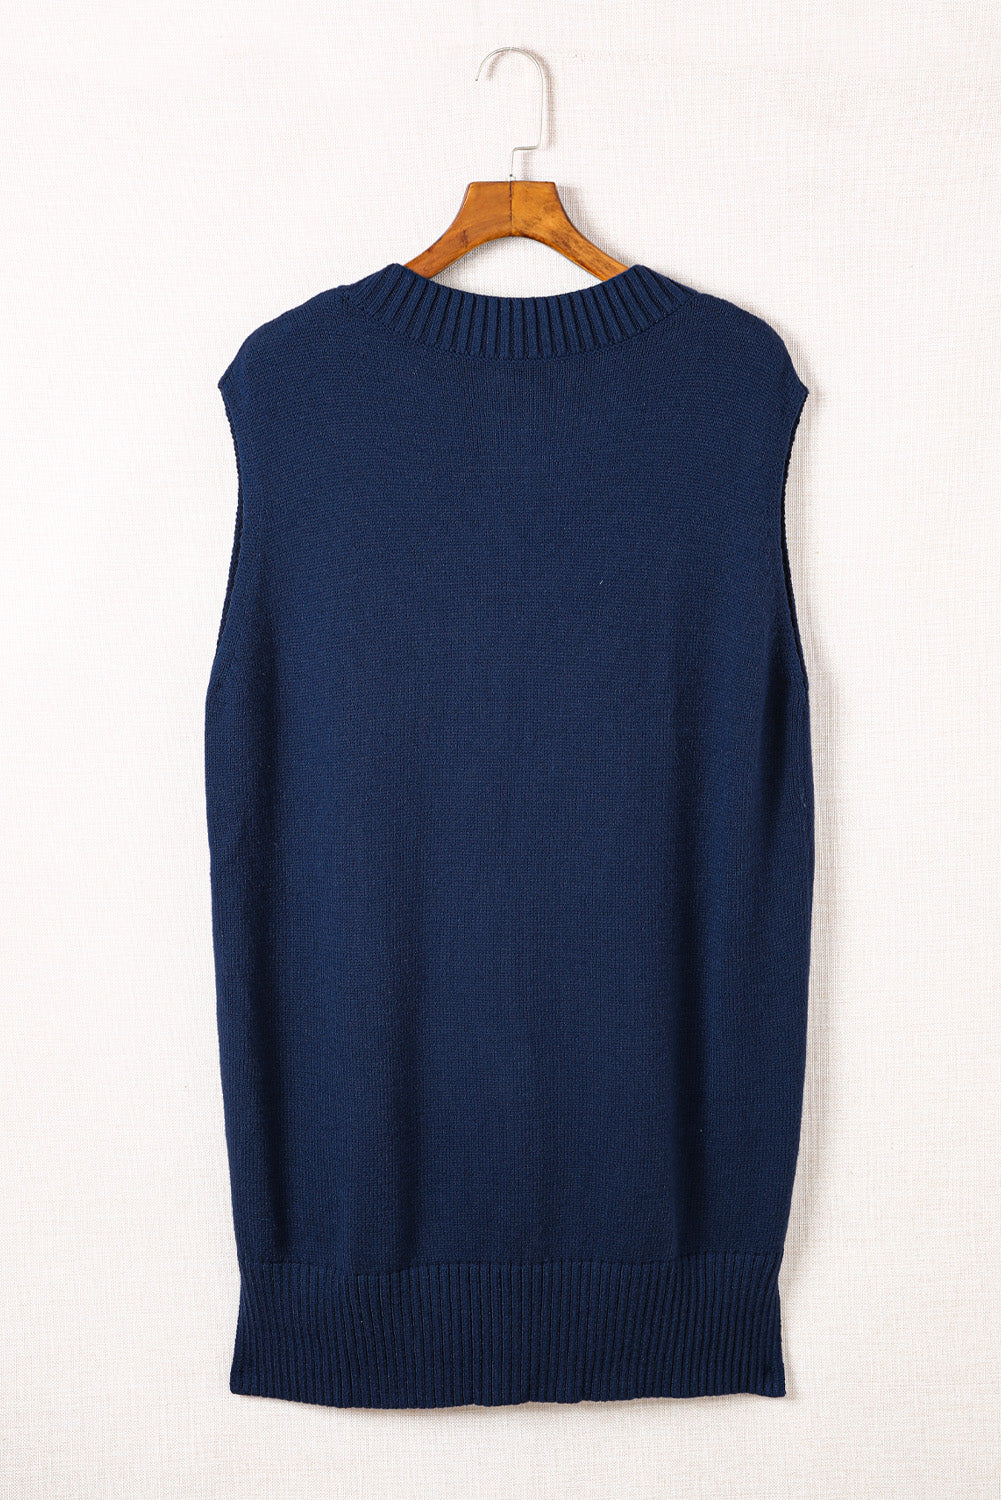 Pull-over en tricot bleu foncé